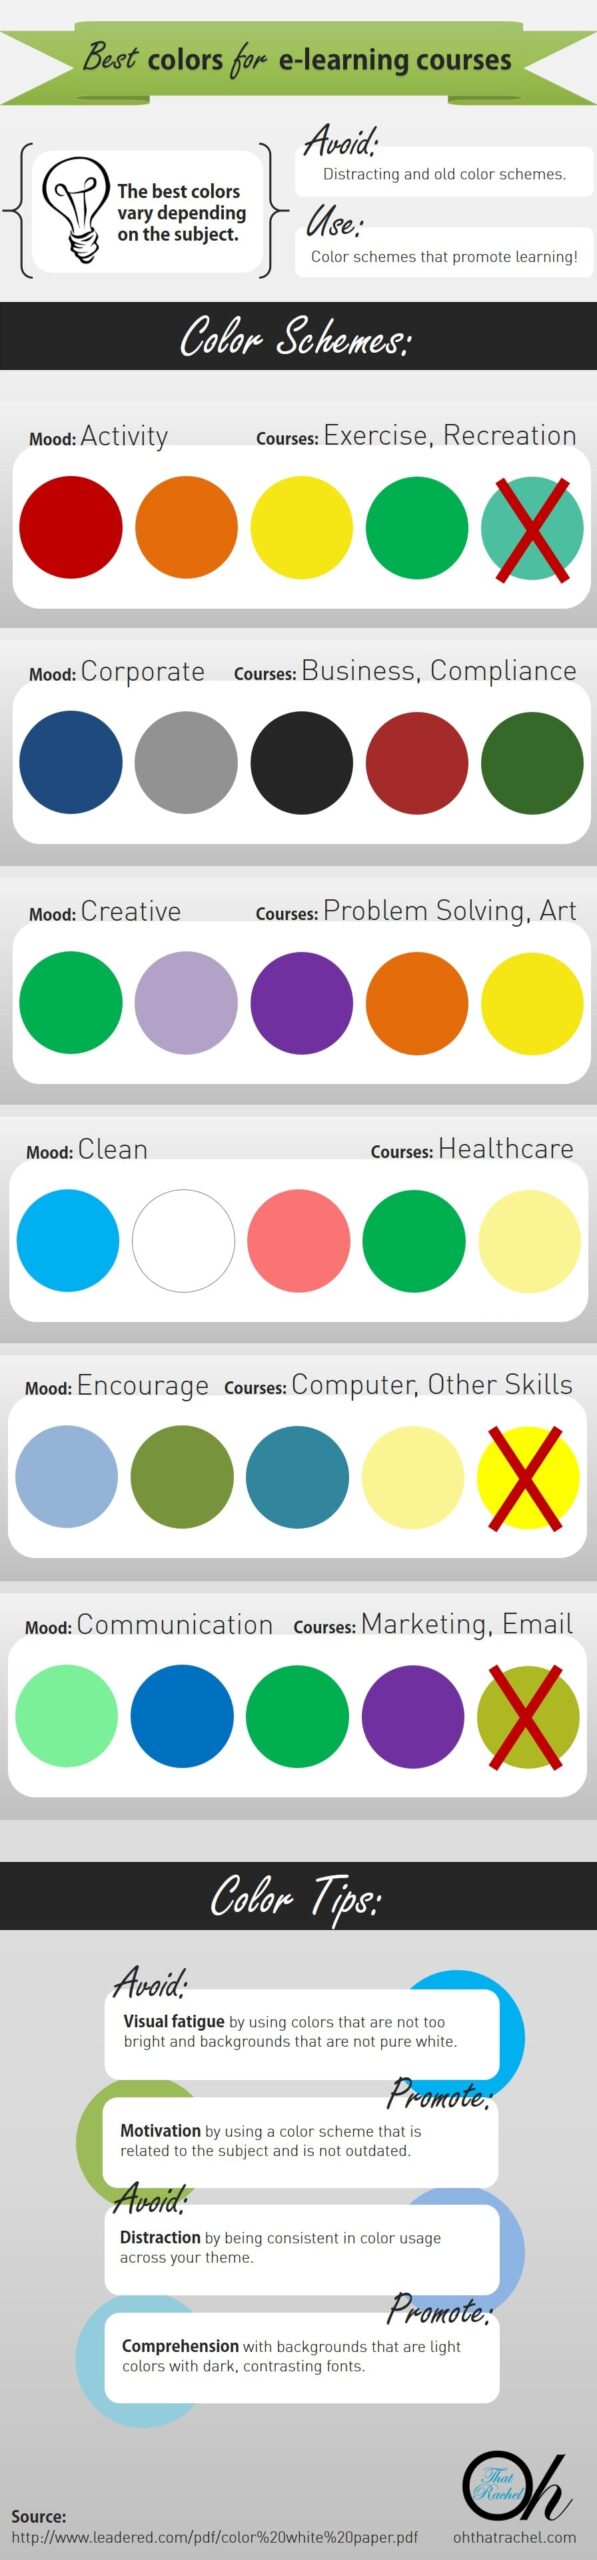 Infographic: Standard combinations of colors - Lorenzo Miglietta | Infographic, Color, Colours